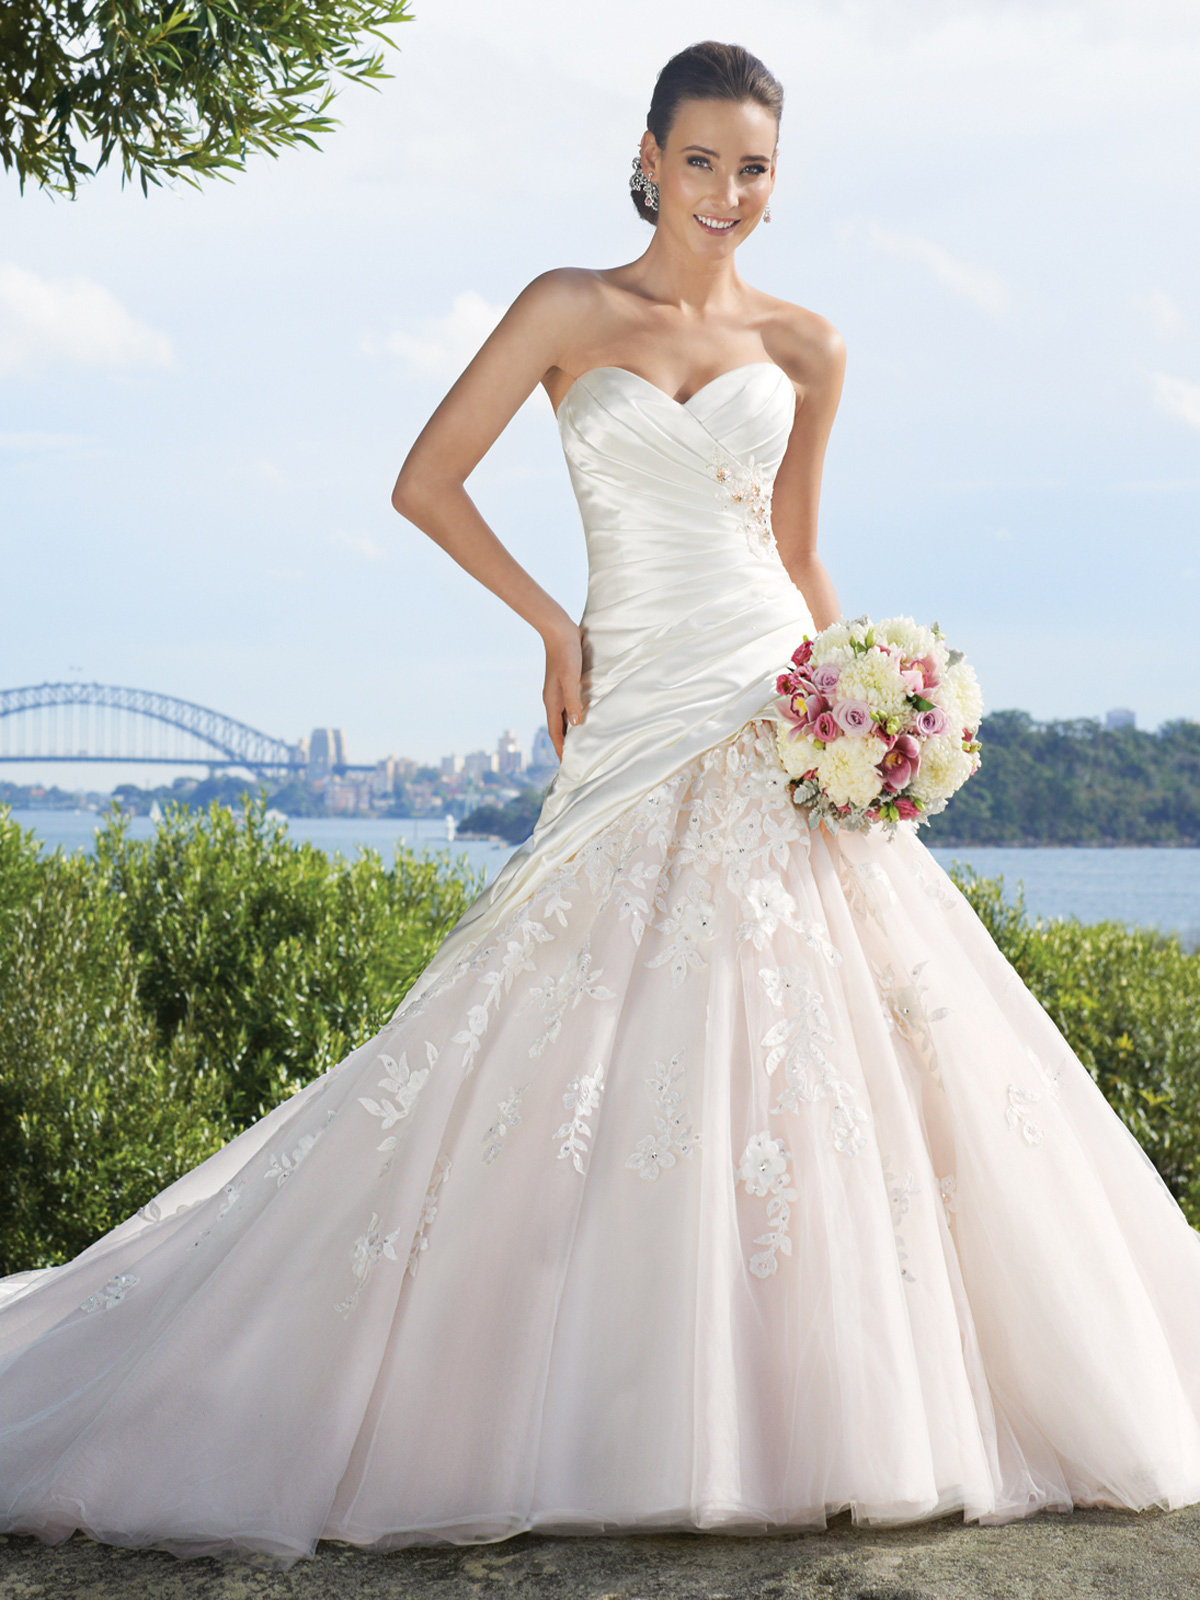 Sweetheart wedding dress with lace motifs